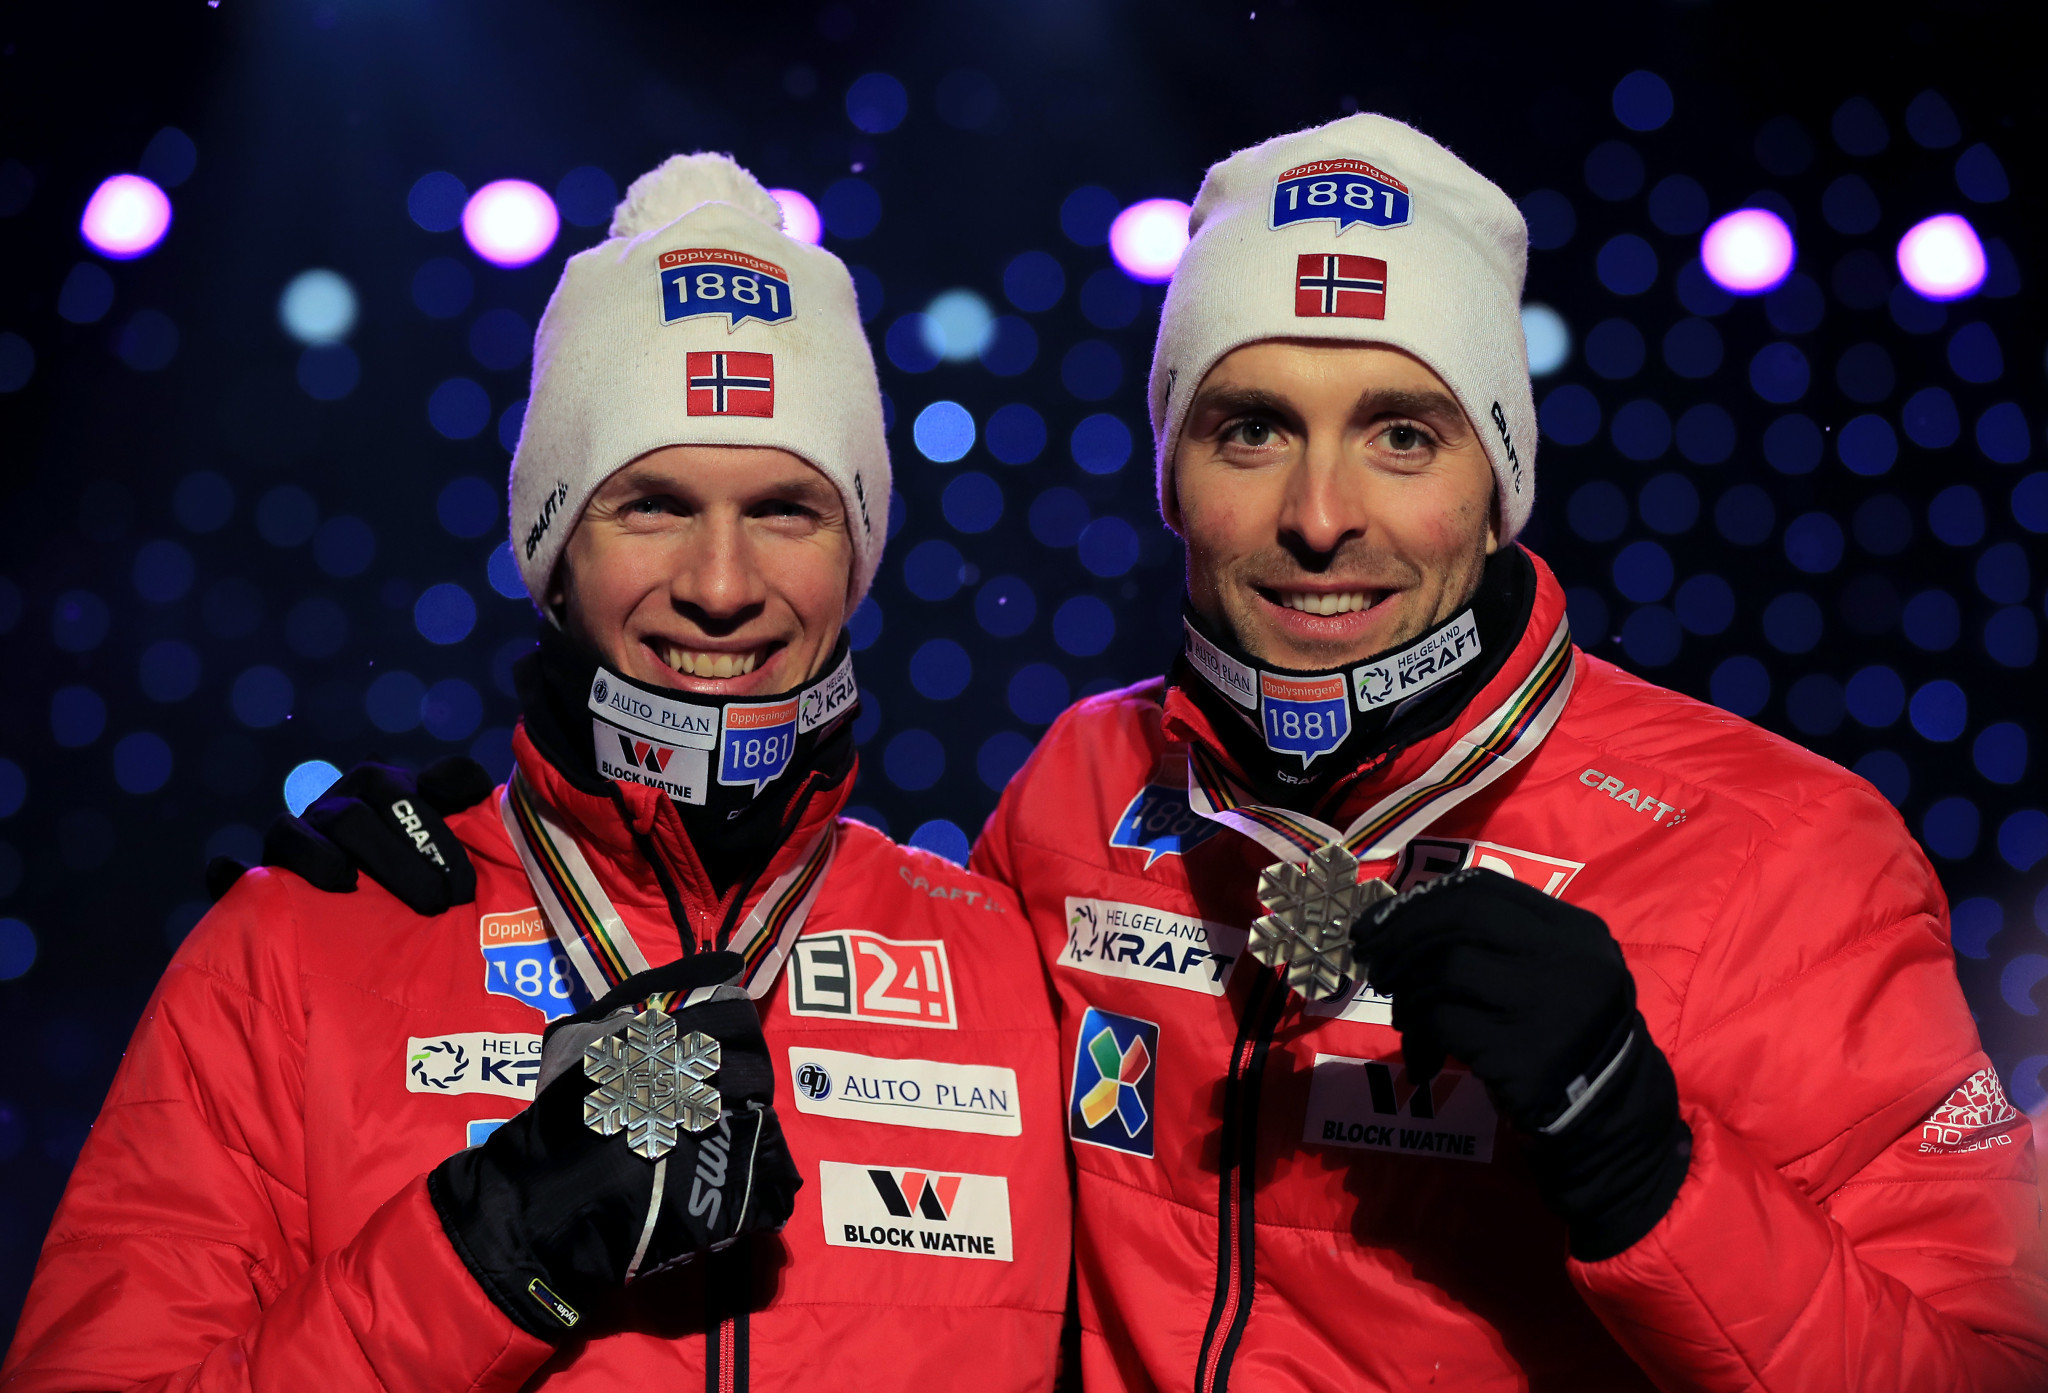 Magnus Krog, left, also won three medals at Nordic Ski World Championships ©Getty Images